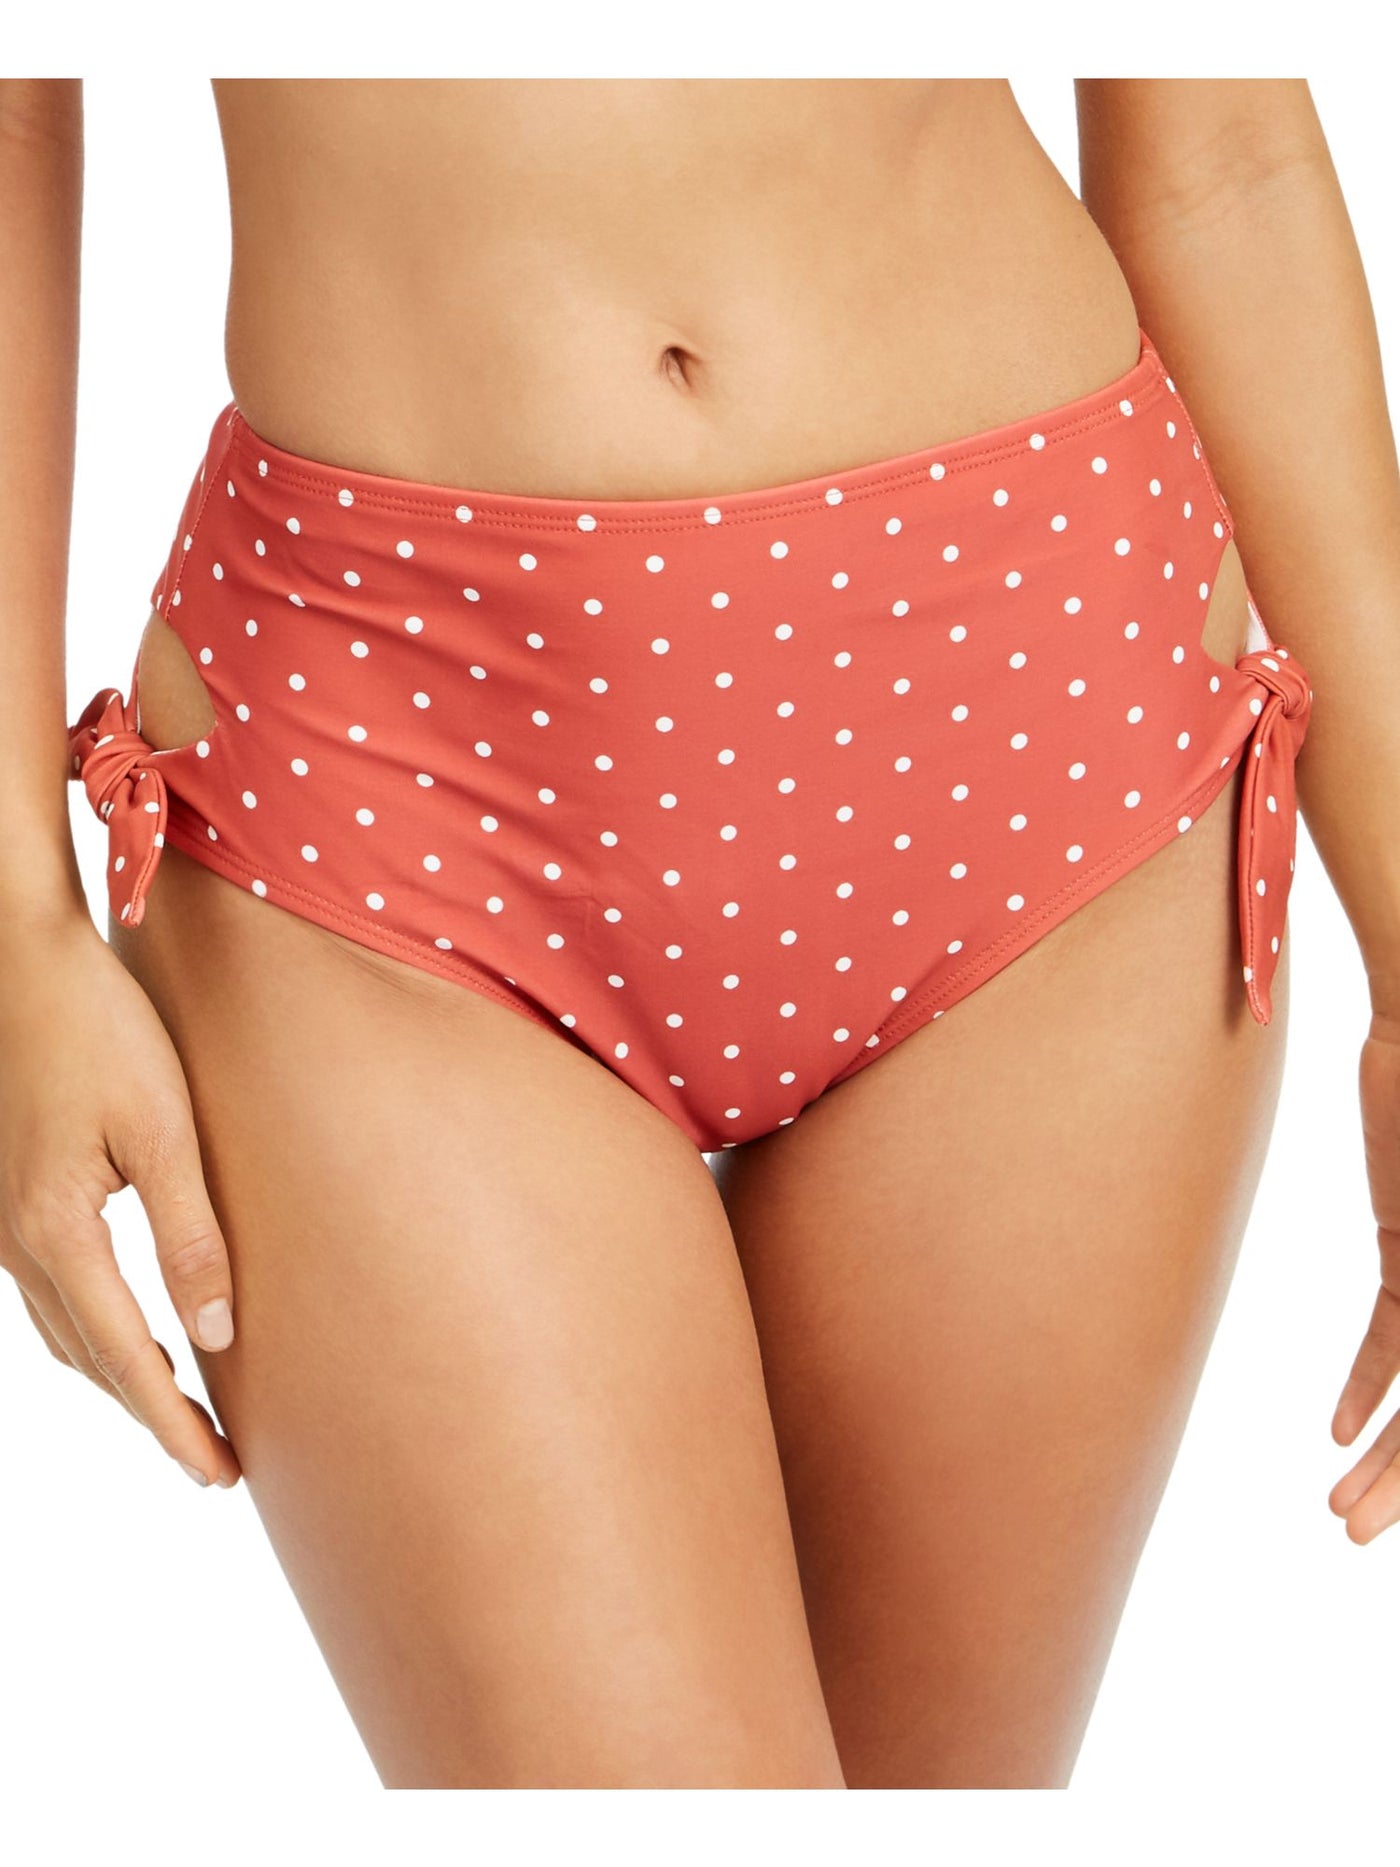 SUNDAZED Women's Orange Polka Dot Stretch Tie Lined Moderate Coverage Cutout Bikini Swimsuit Bottom S